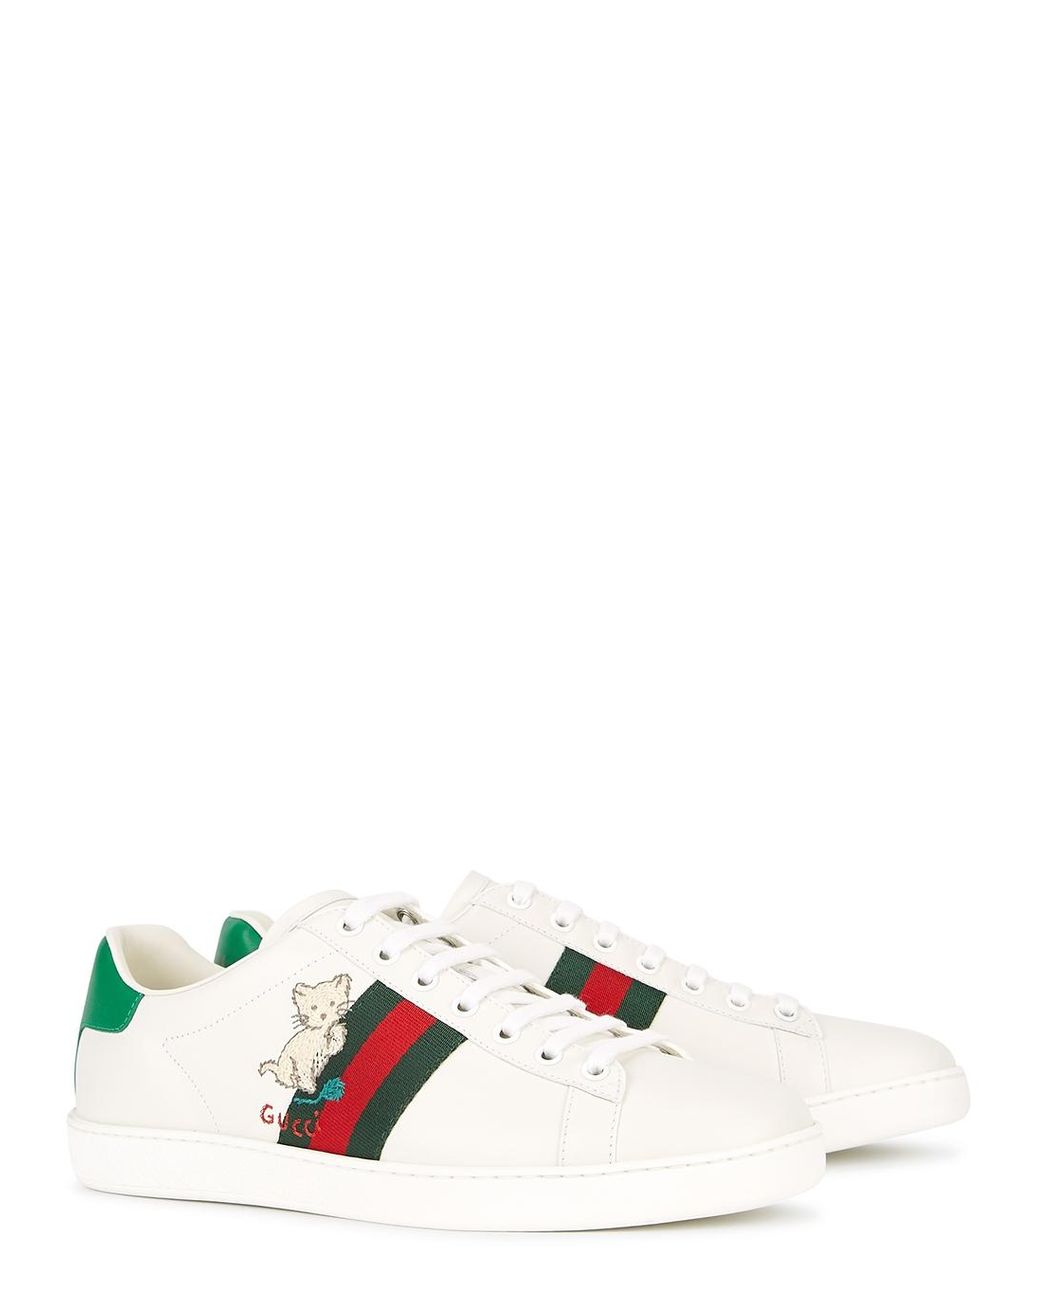 Gucci Kitten Ace Sneakers in White | Lyst